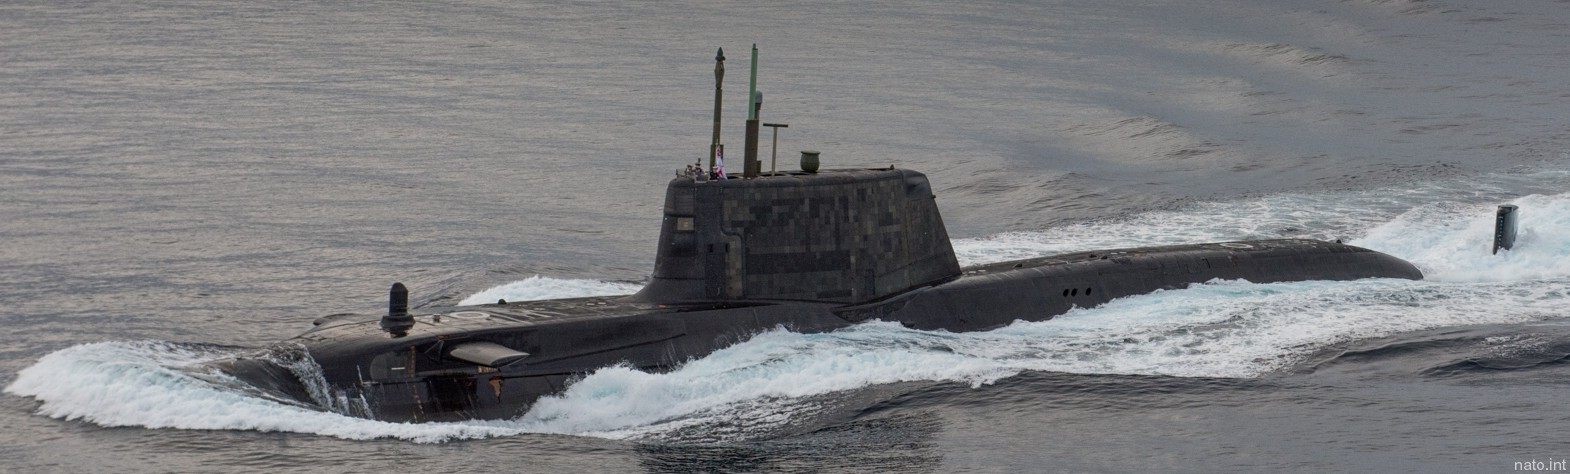 s120 hms ambush s-120 astute class attack submarine ssn hunter killer royal navy 12